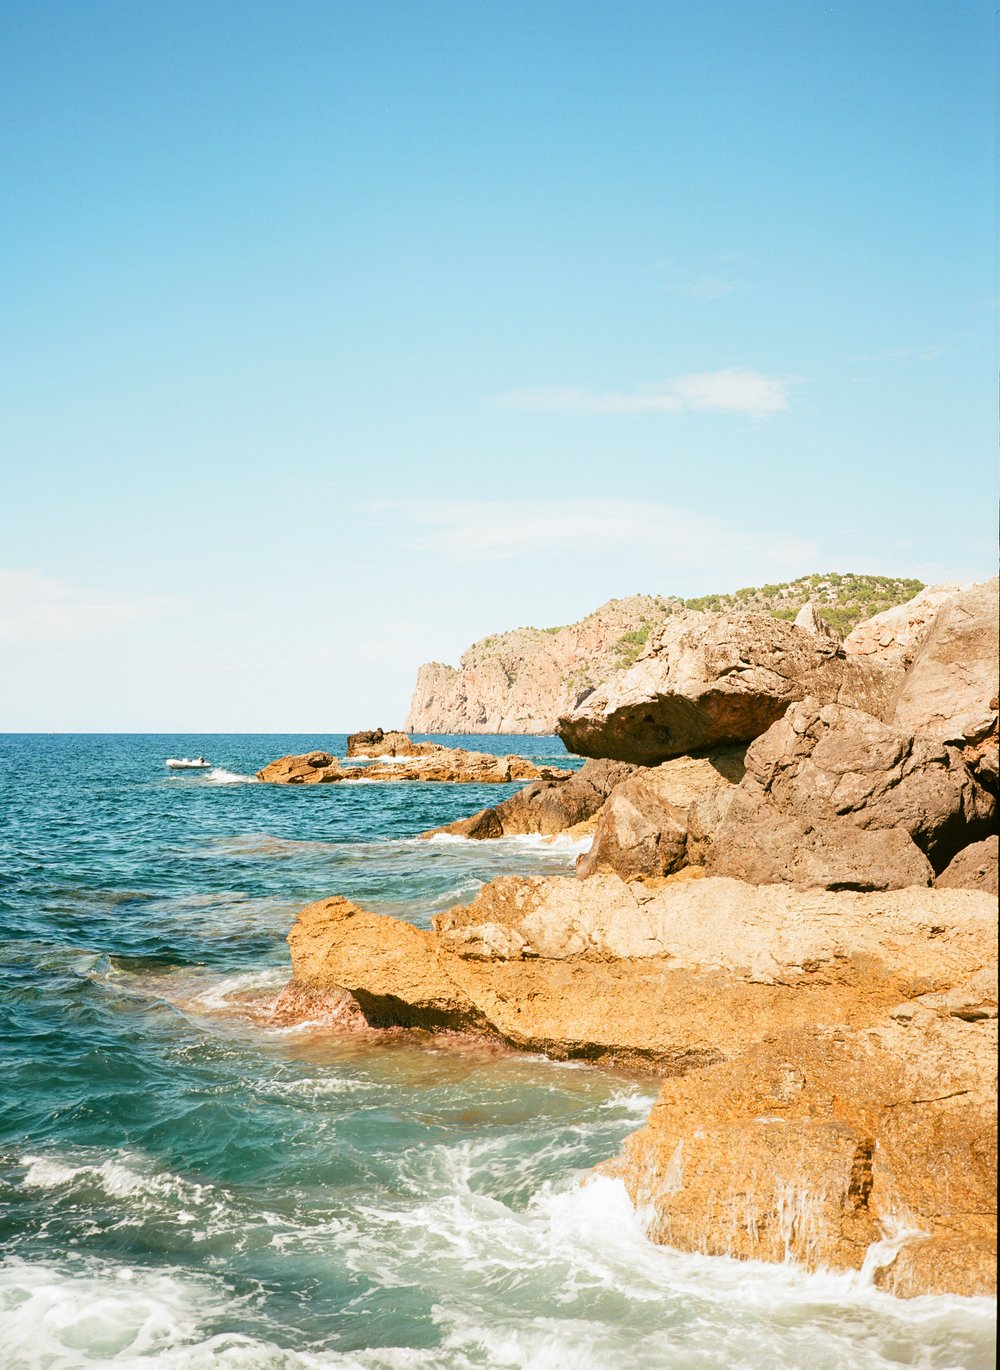  waves crashing on the rocky shores of Mallorca, Spain 